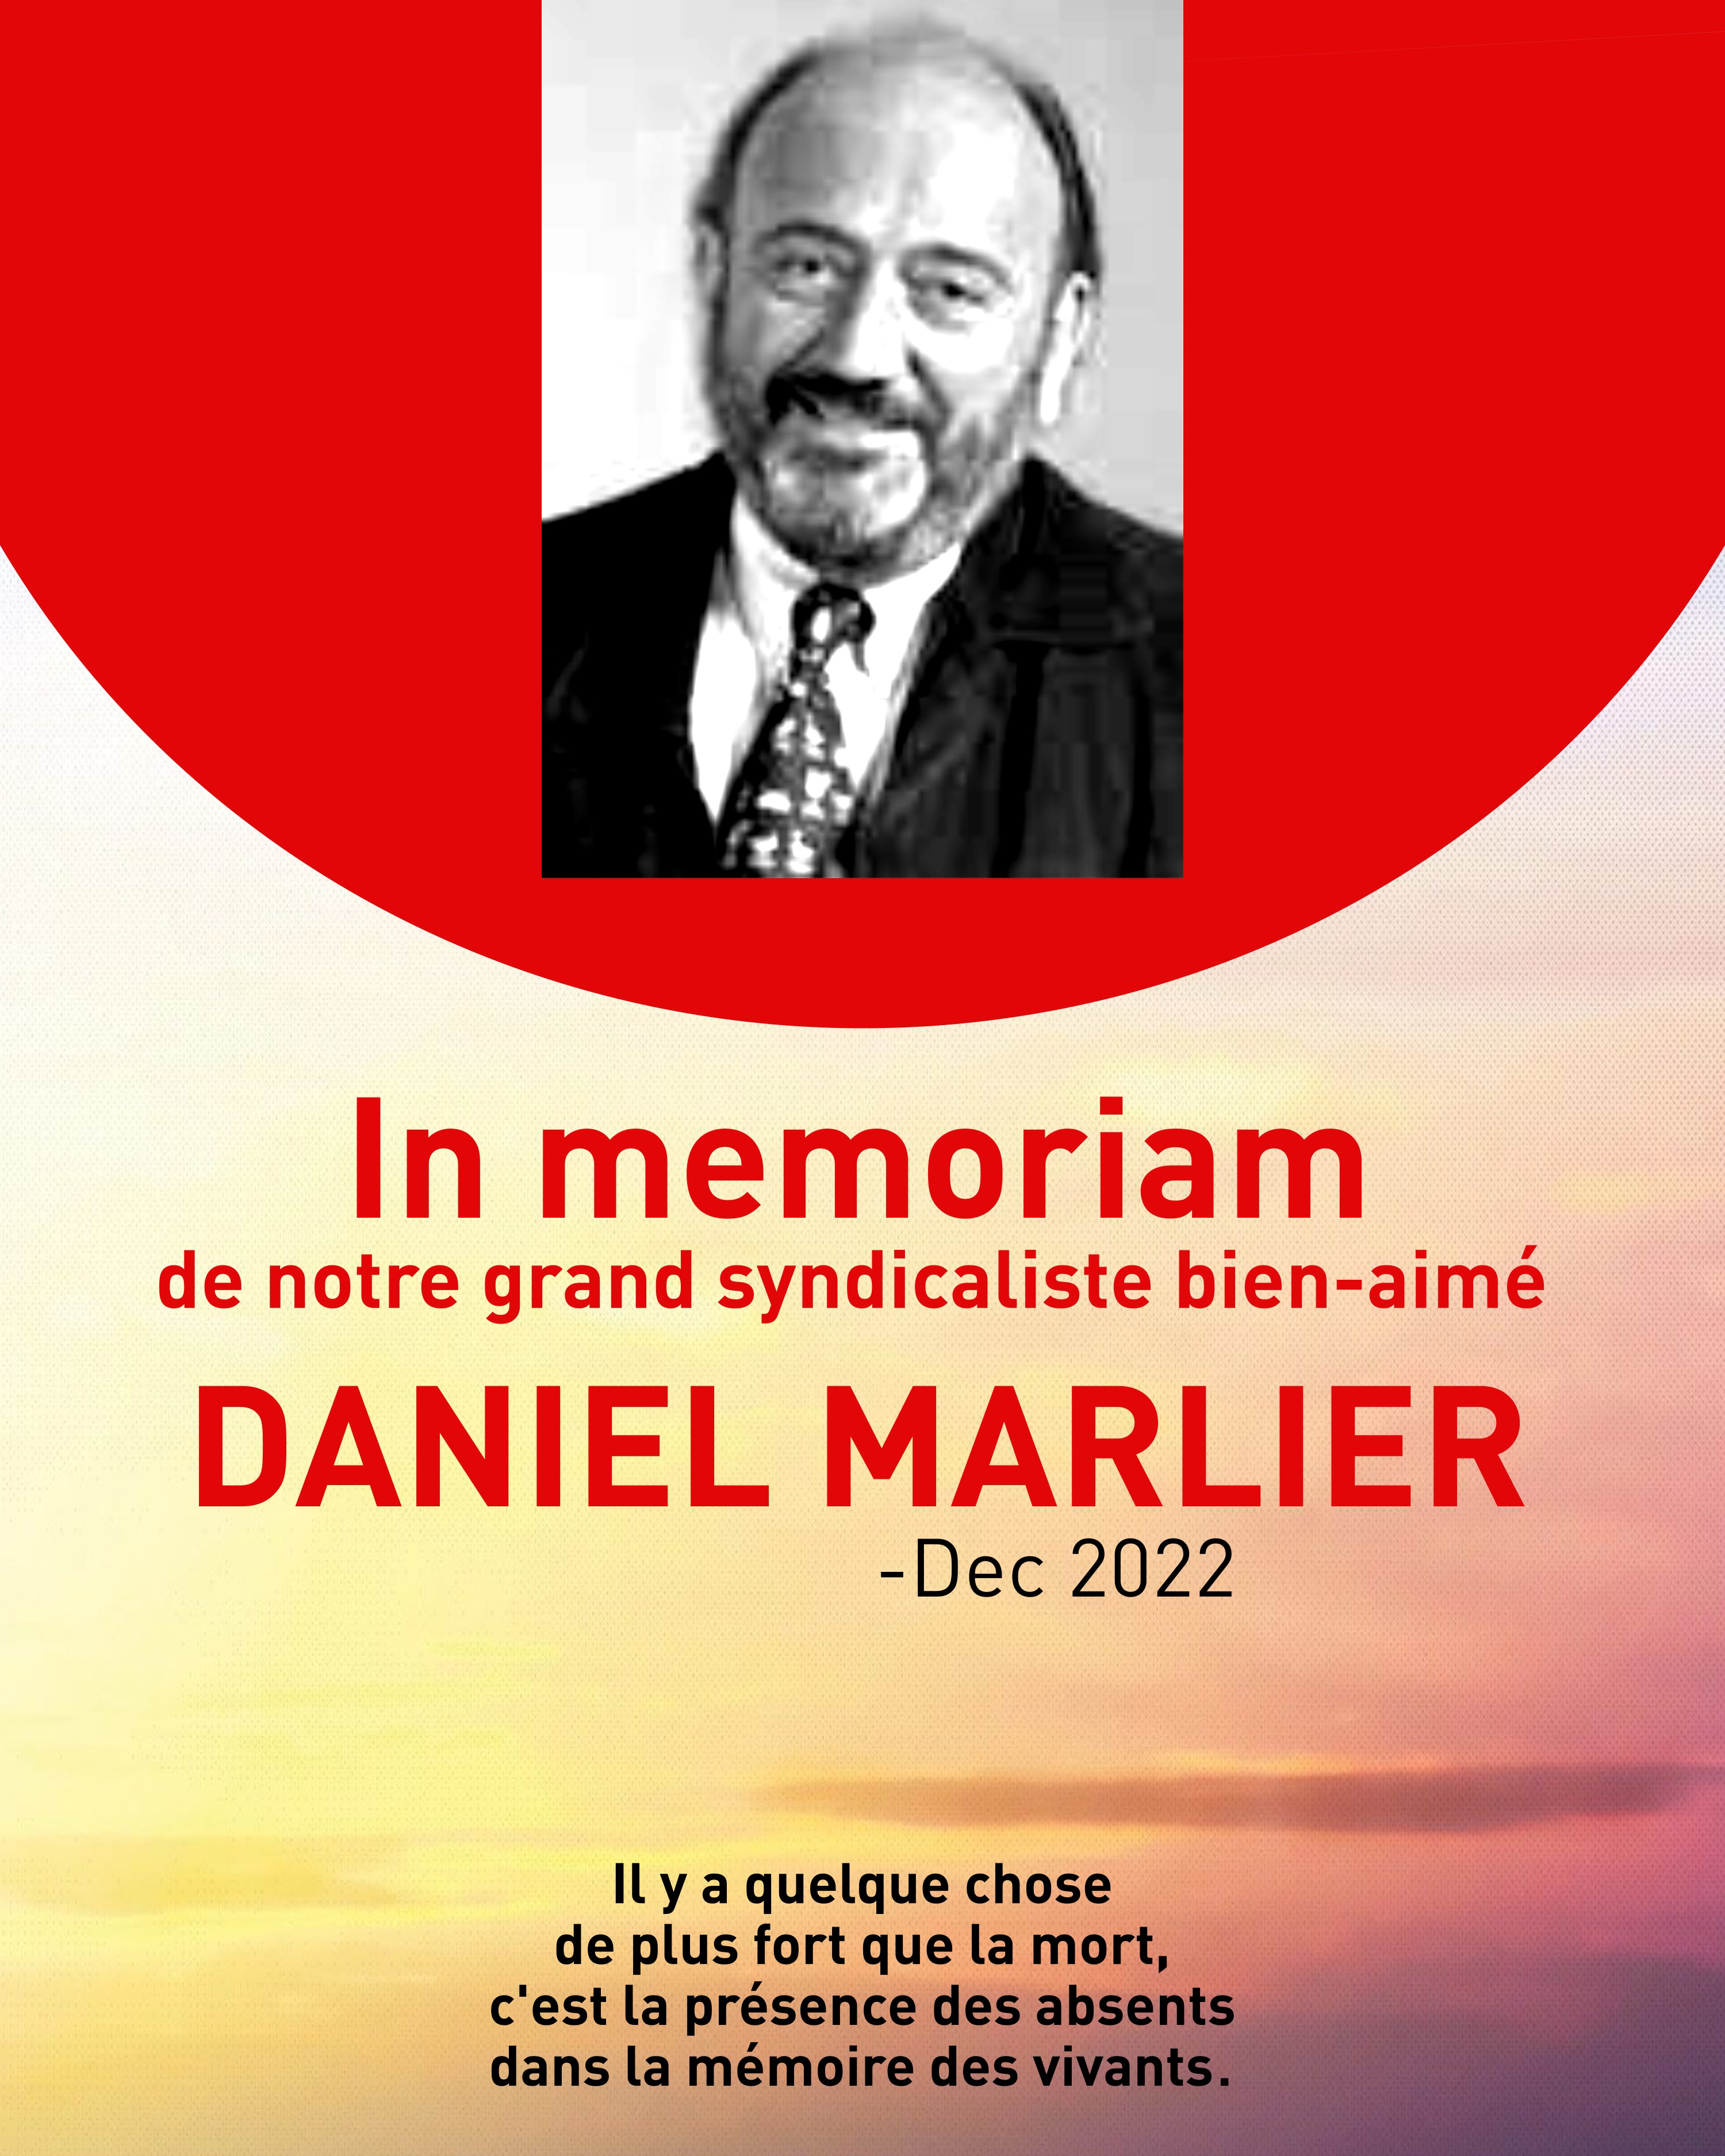 In memoriam Daniel Marlier